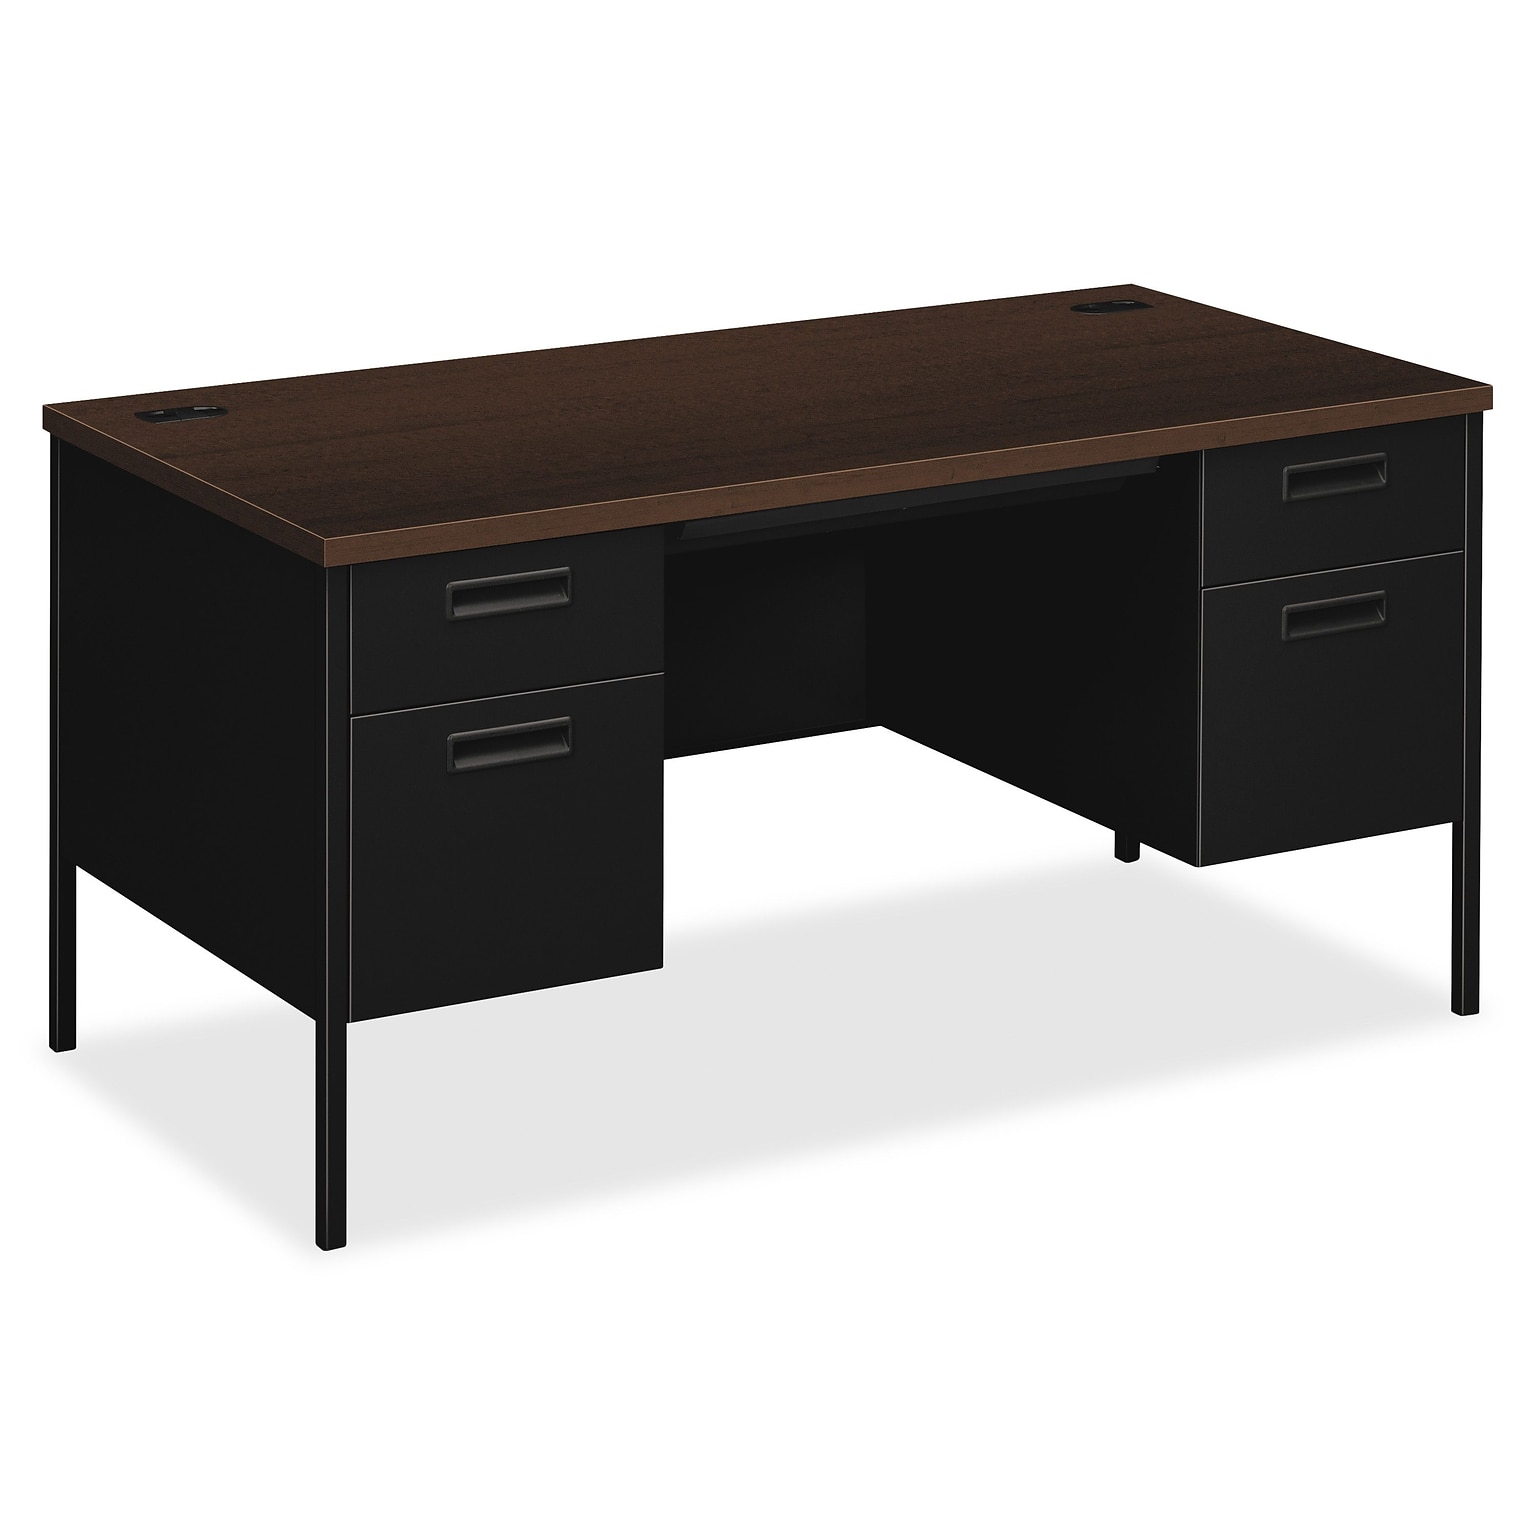 HON® Metro Classic Double Pedestal Desk, Mocha, 60 x 30 x 29.5, 4 x Box Drawer(s), File Drawer(s), Double Pedestal